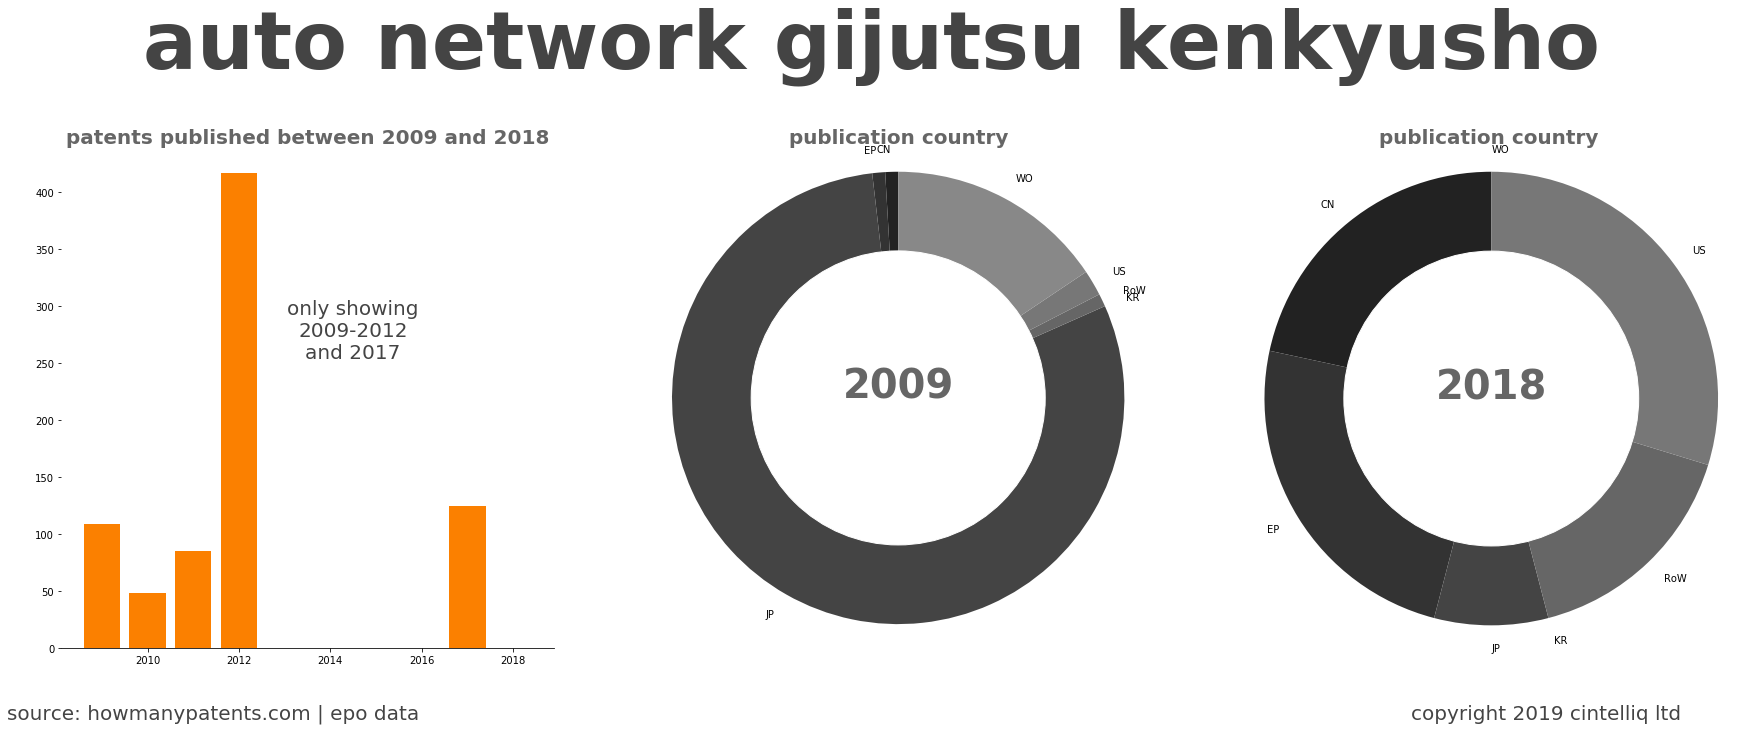 summary of patents for Auto Network Gijutsu Kenkyusho